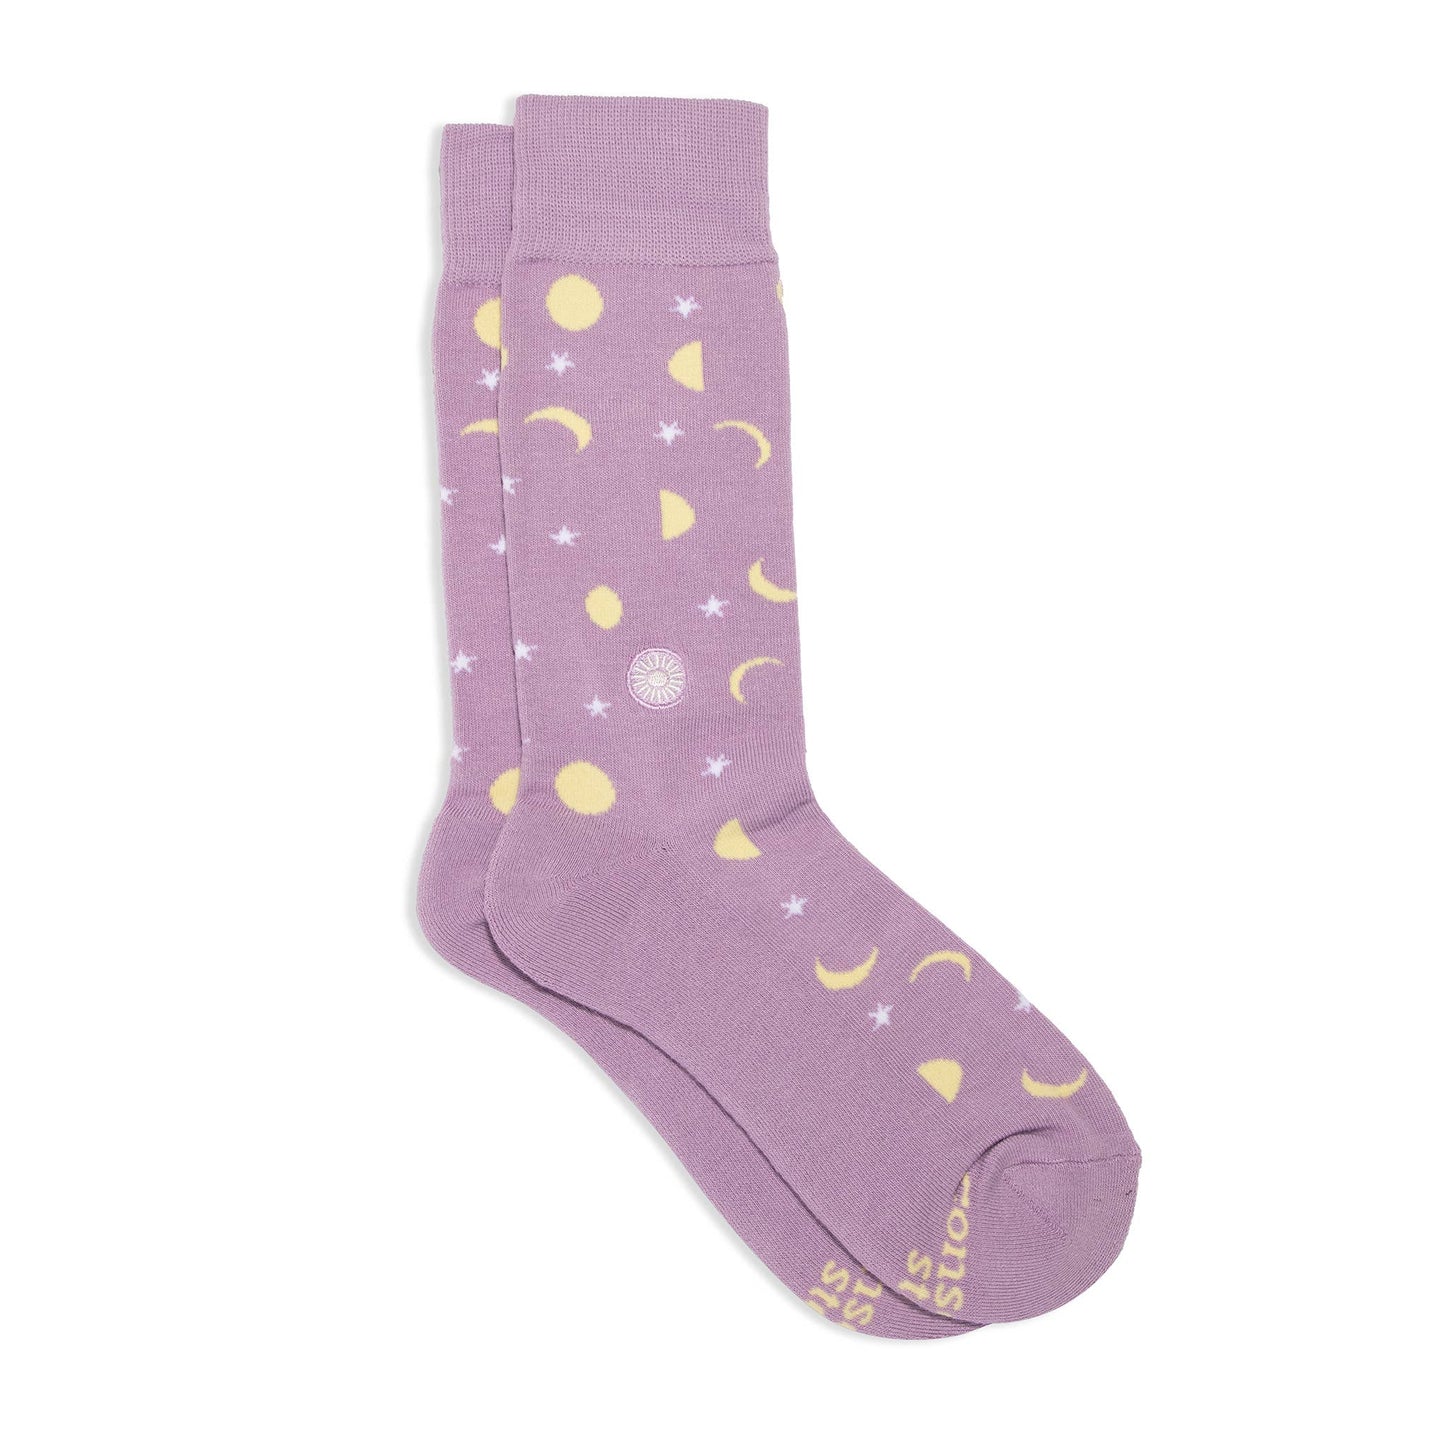 Socks that Support Mental Health (Purple Moons)